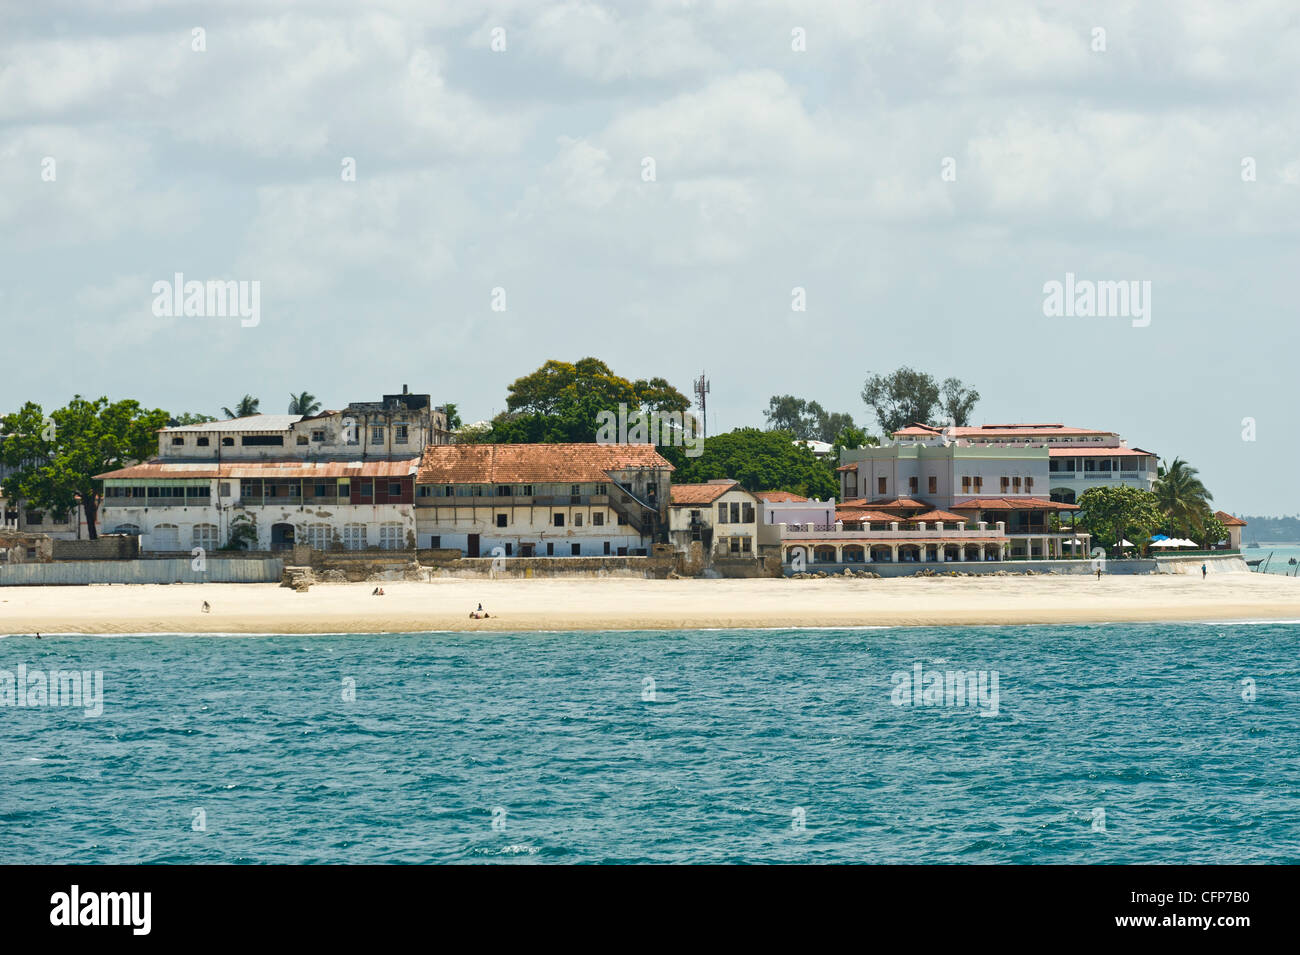 Mambo Msiige (left) and Serena Inn Hotel (right) in Stone Town Zanzibar Tanzania Stock Photo